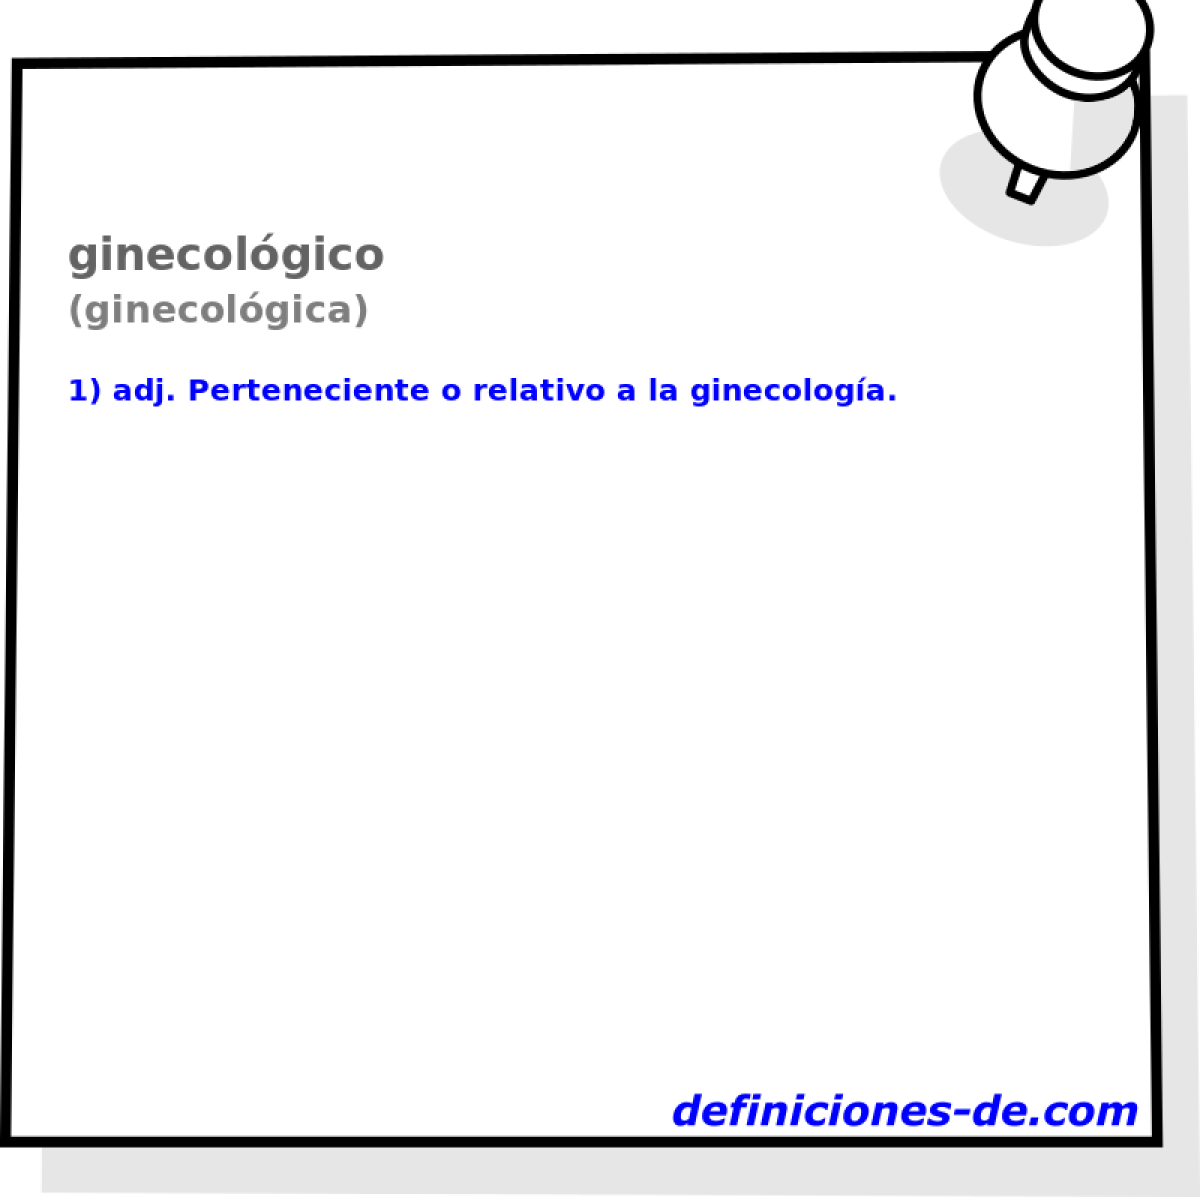 ginecolgico (ginecolgica)